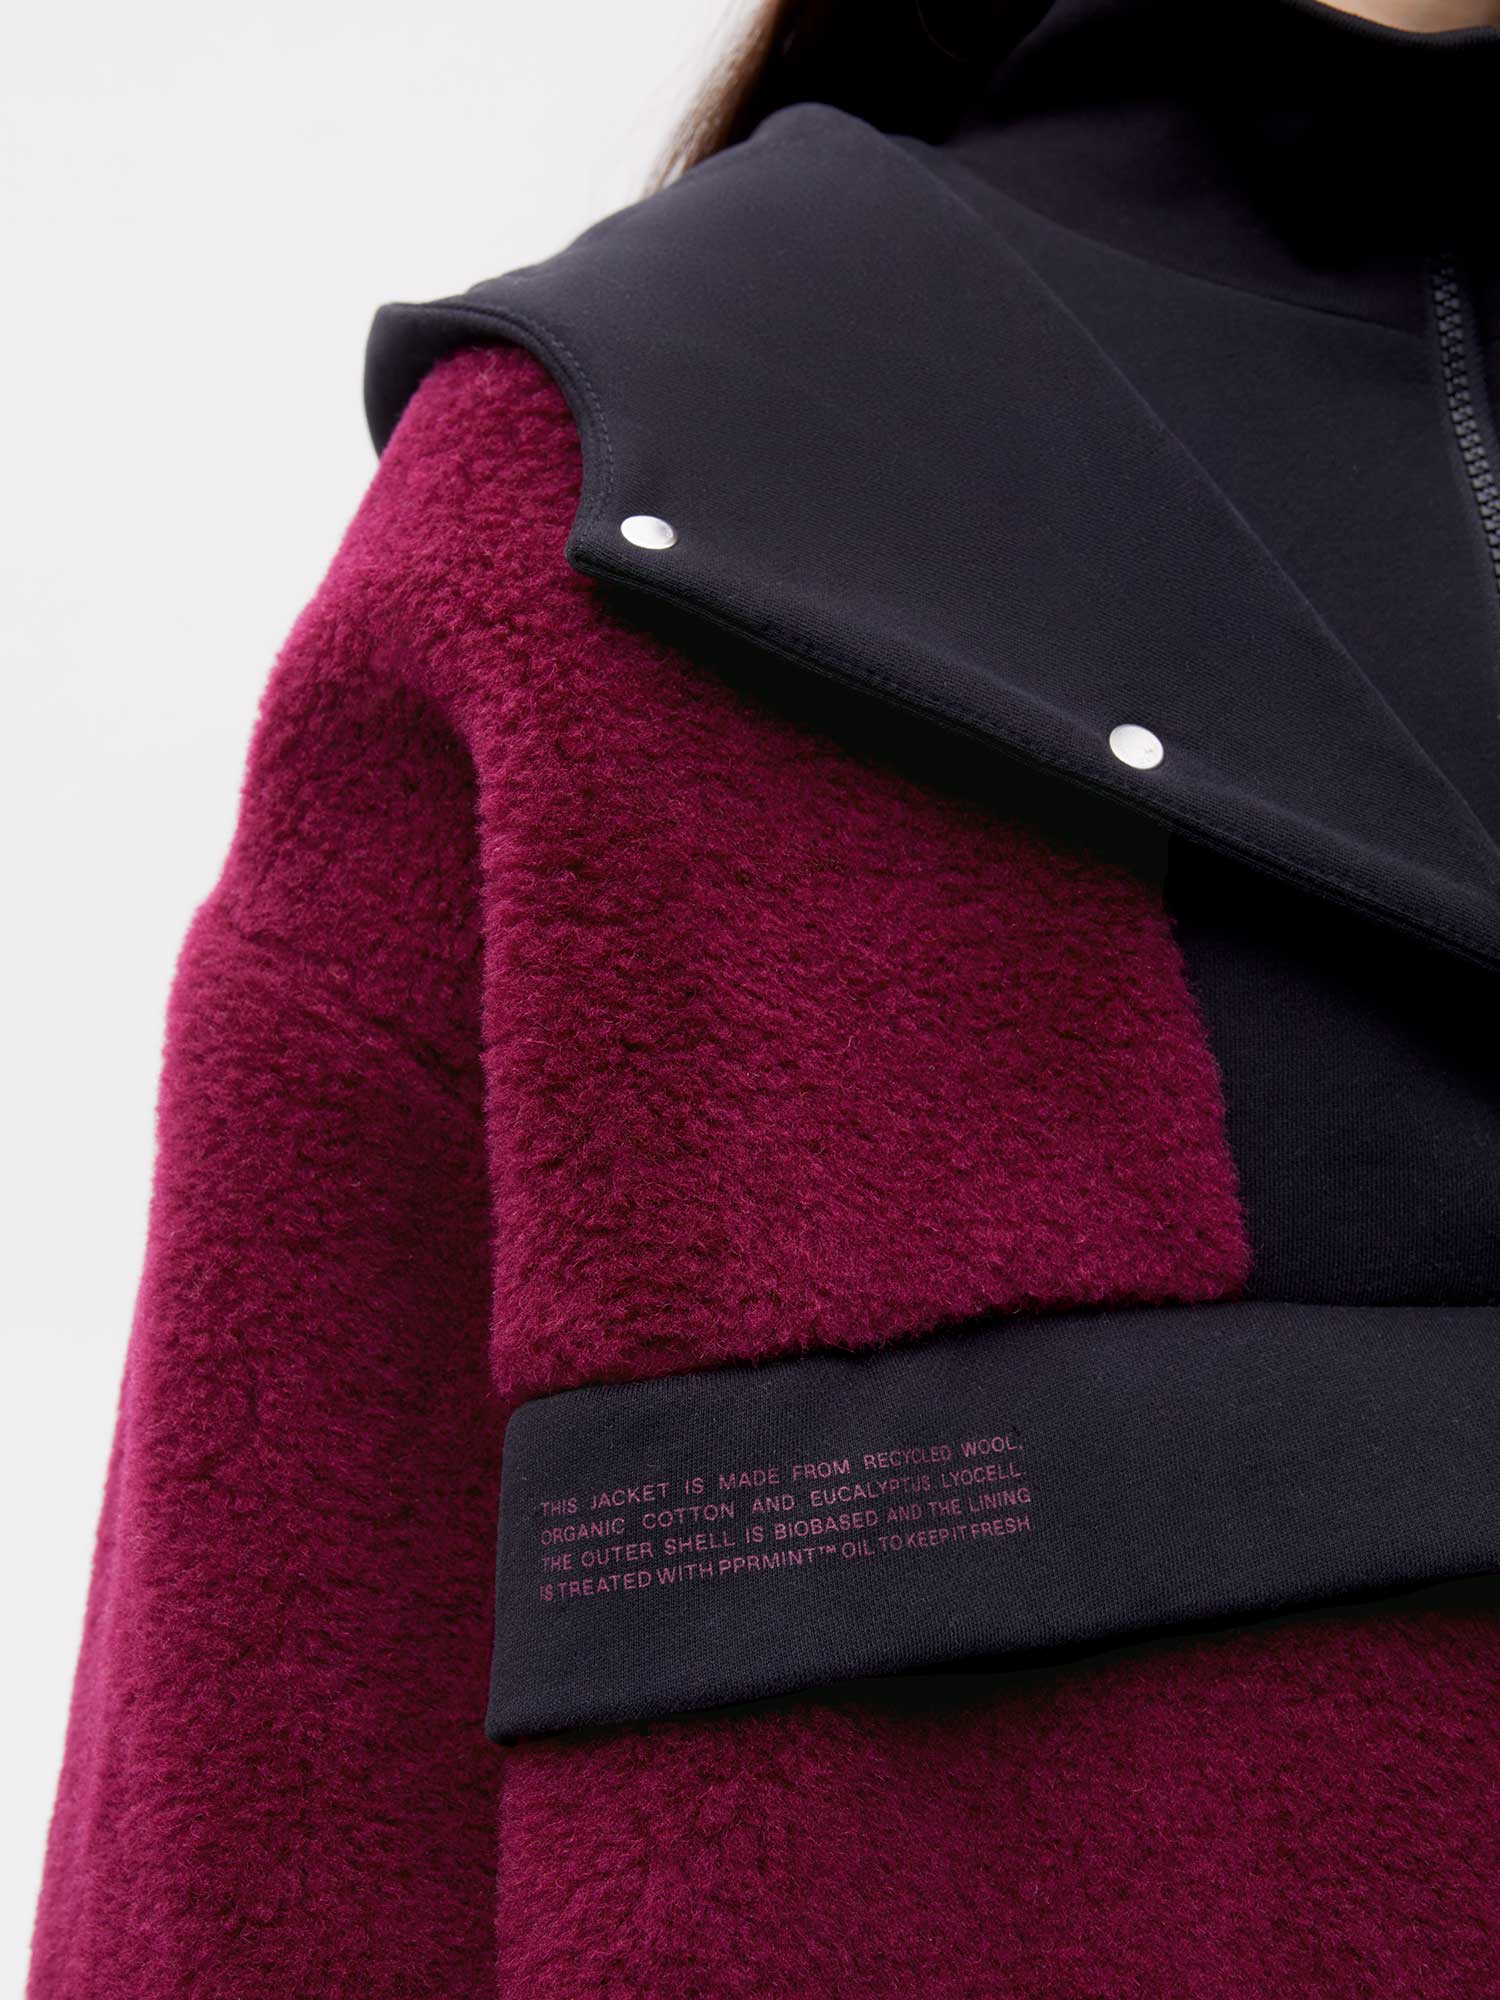 Recycled Wool Fleece Half Zip Jacket—plum purple female